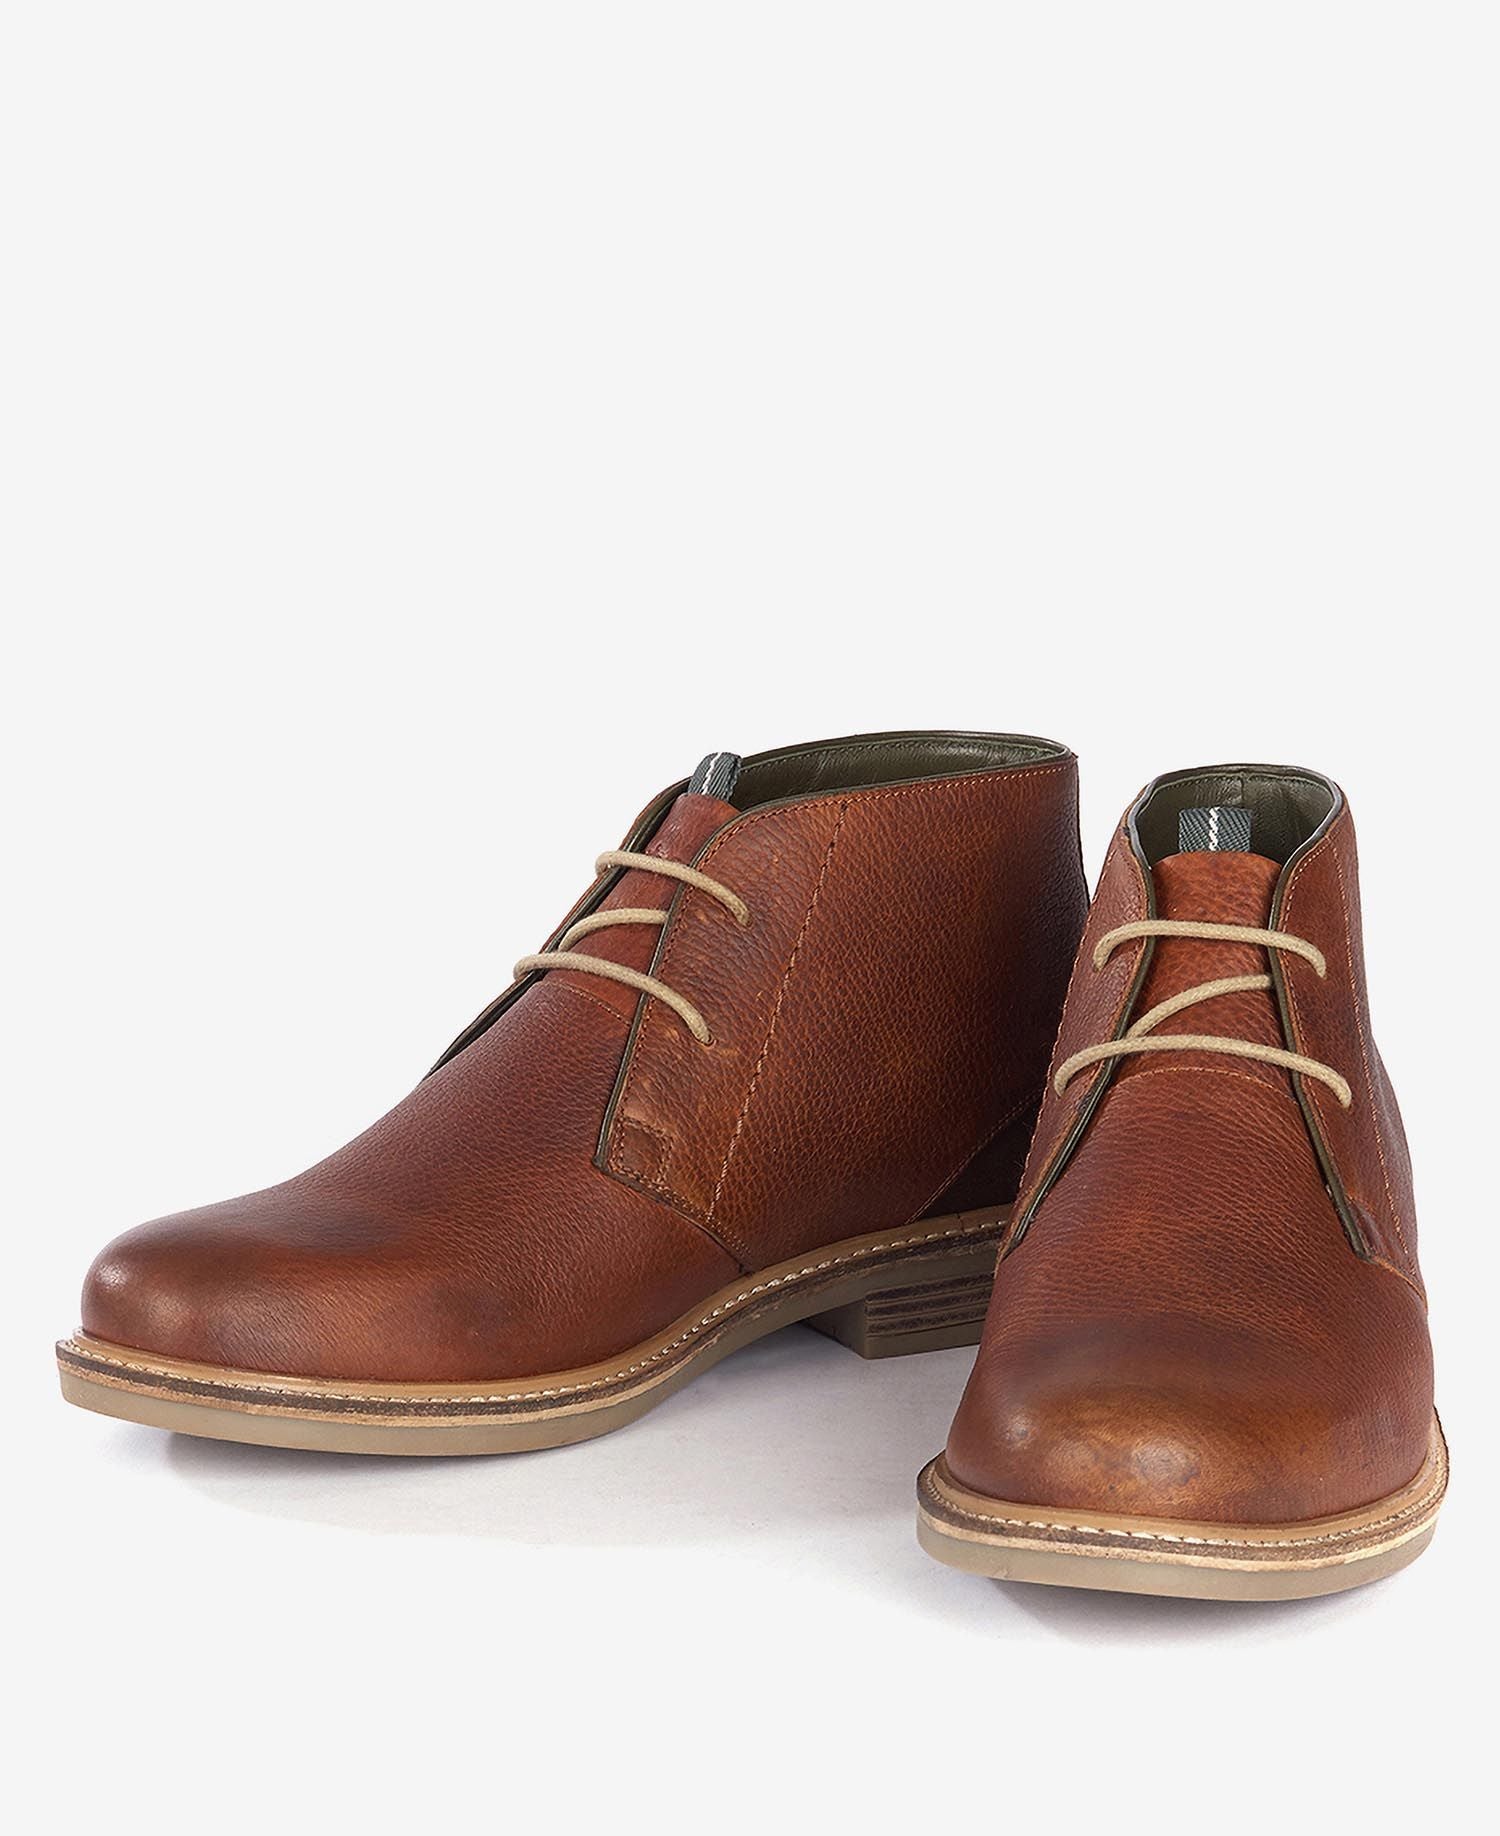 Men's Readhead Boots - Cognac